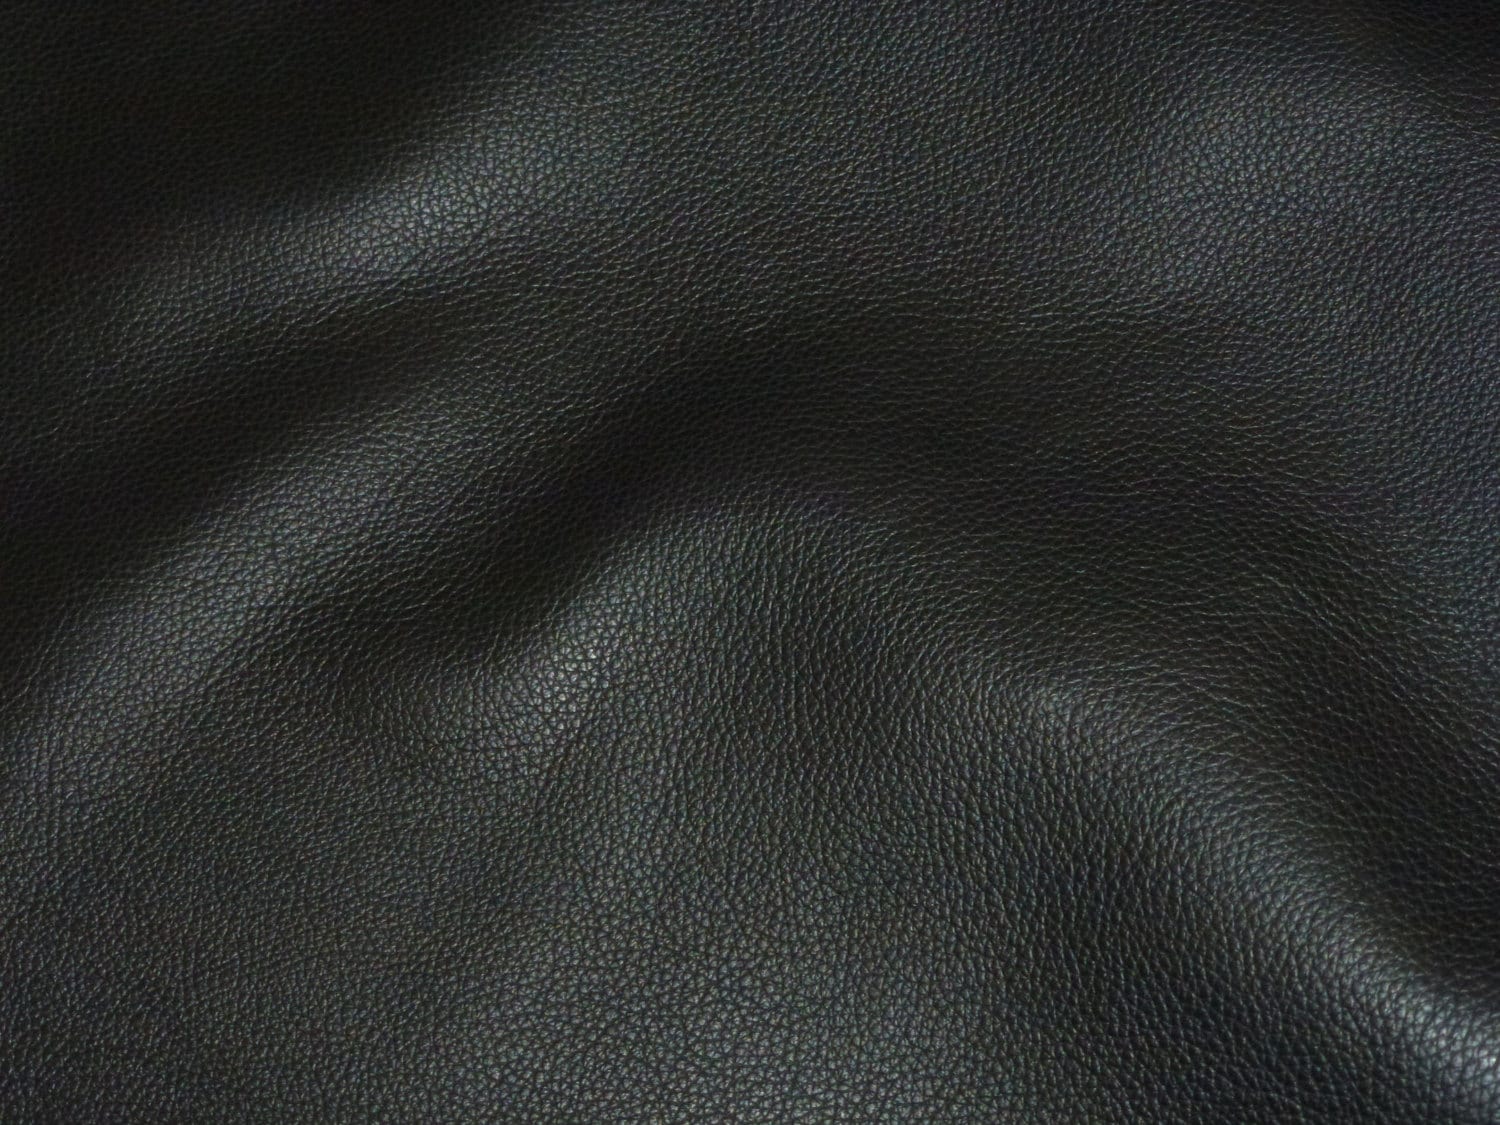 Biker 12x12 BLACK Top Grain Cowhide Leather 3-3.5 oz / 1.2-1.4mm ...